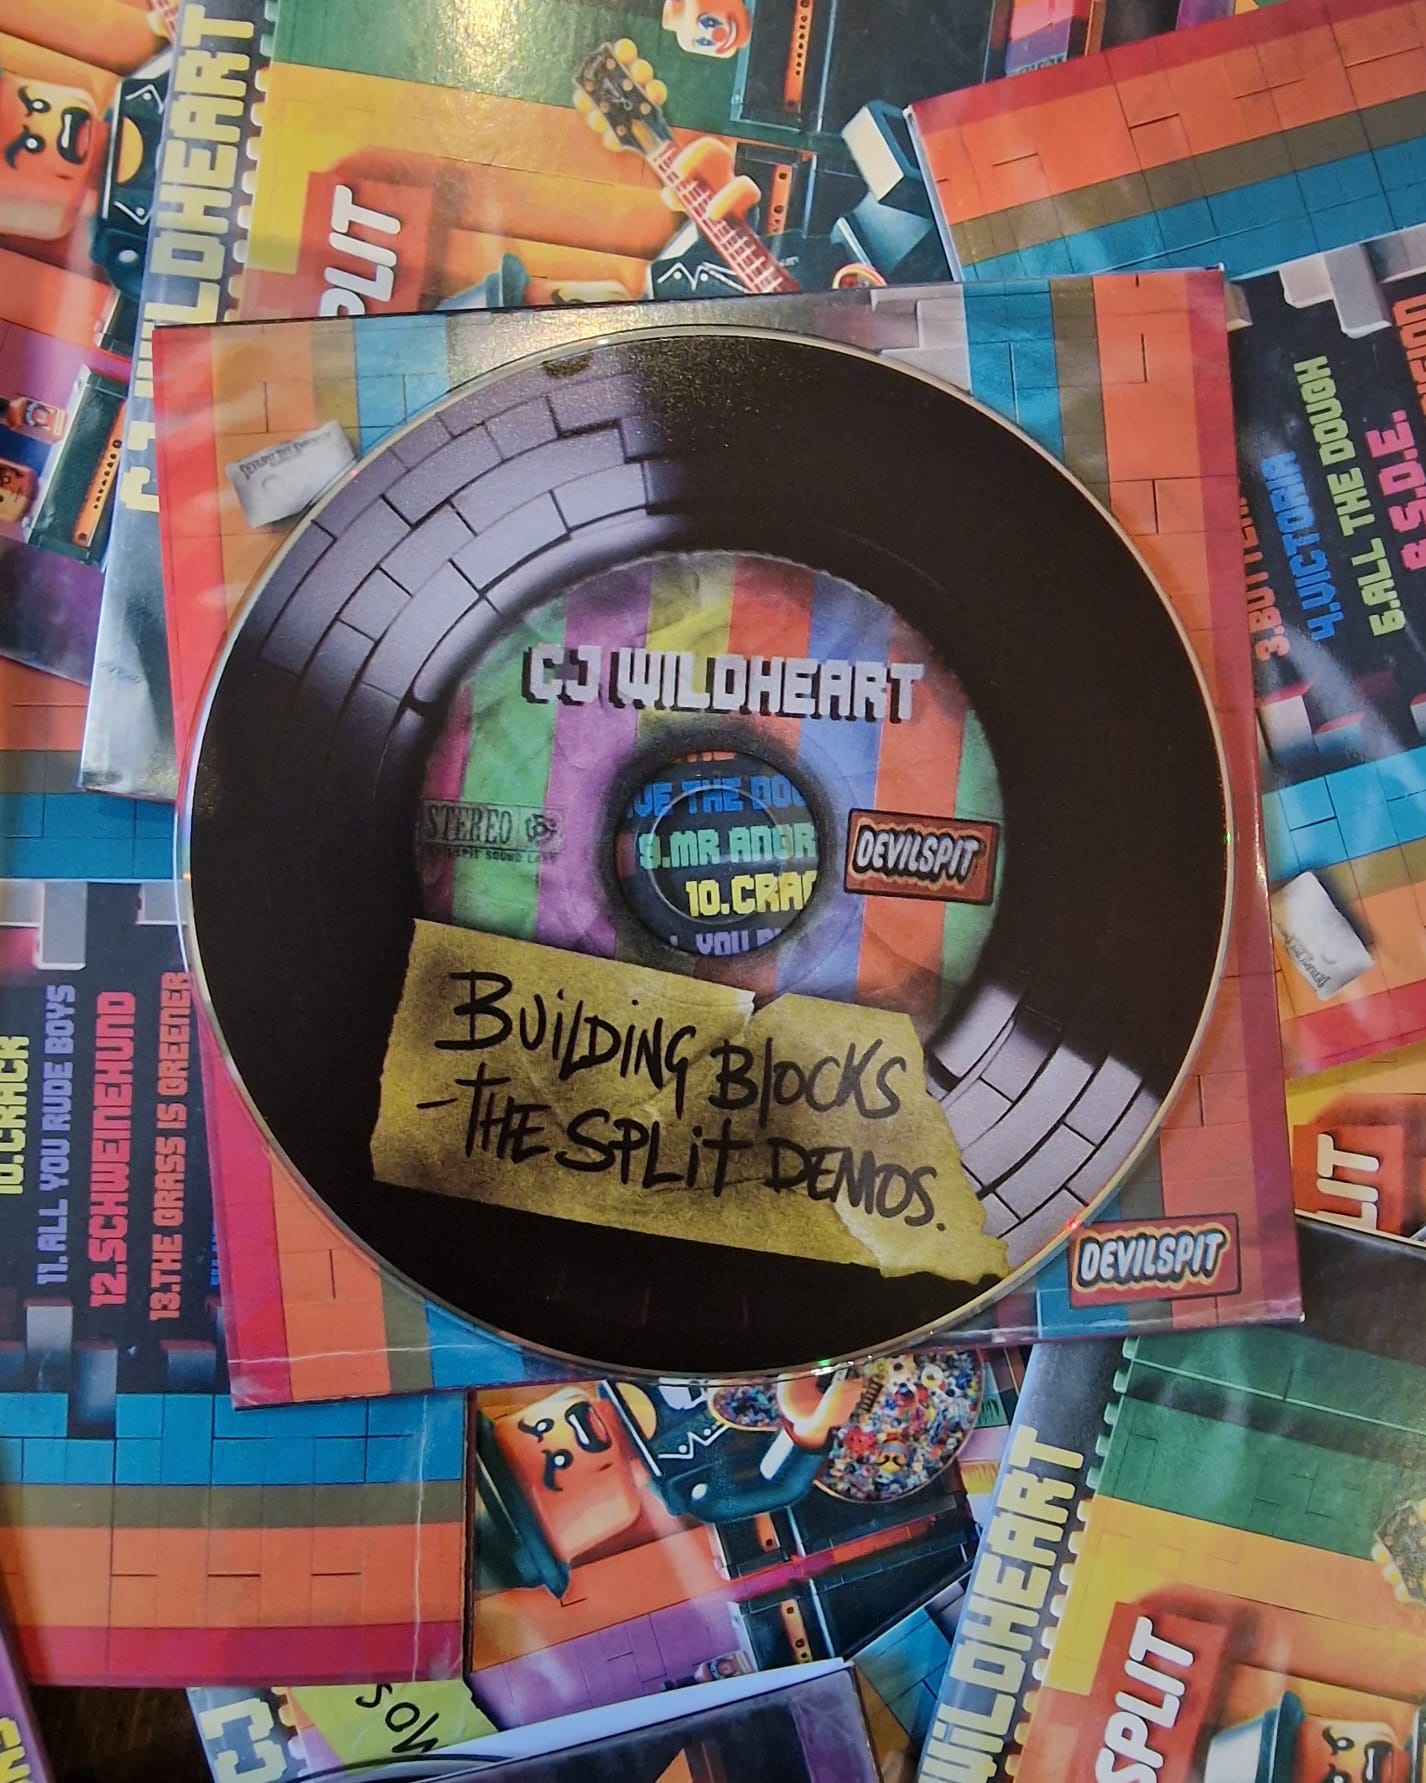 CJ Wildheart - The Building Blocks CD (SIGNED COPY)